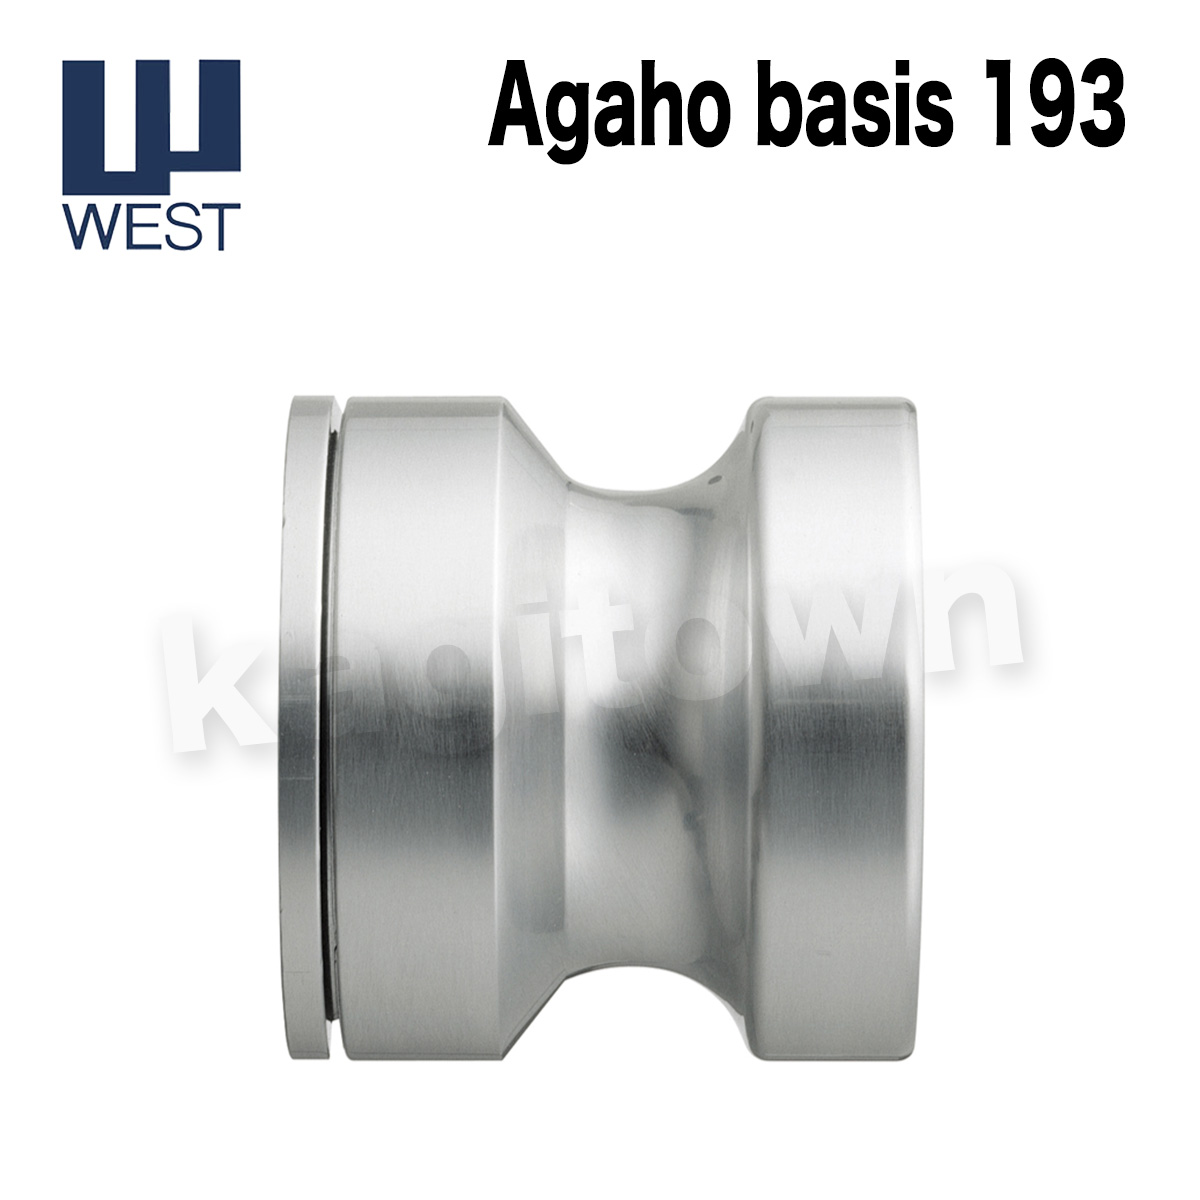 WEST 【ウエスト】ハンドル錠[WEST-193]Agaho basis 193